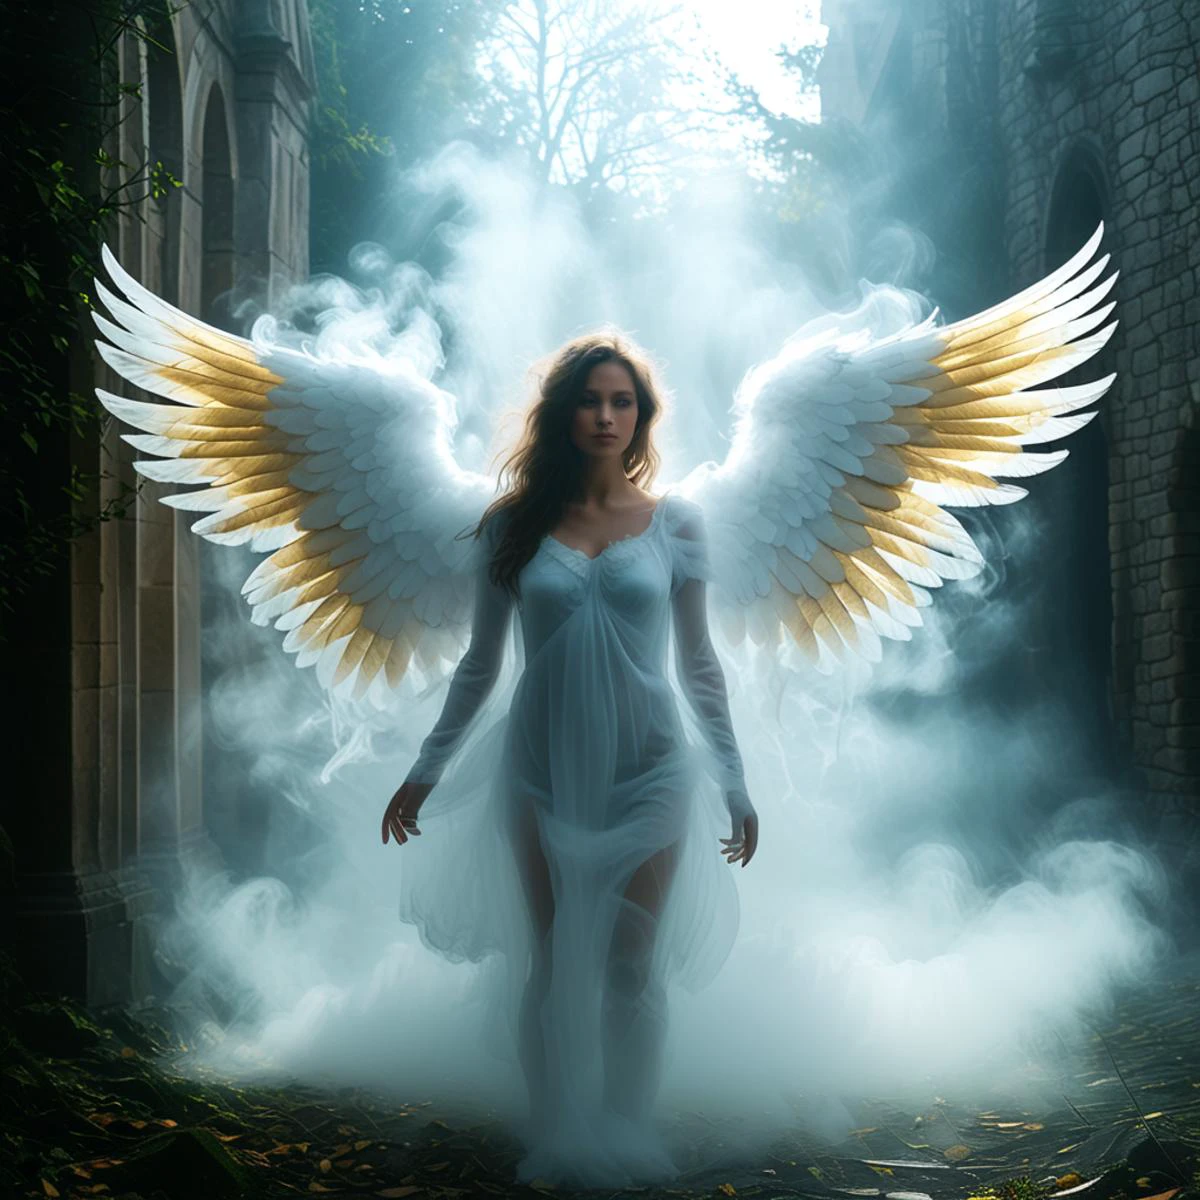 mdfg 金色の天使の羽を持つ霧の女性, 後ろの明るい光, 城の中で,.閉じる 